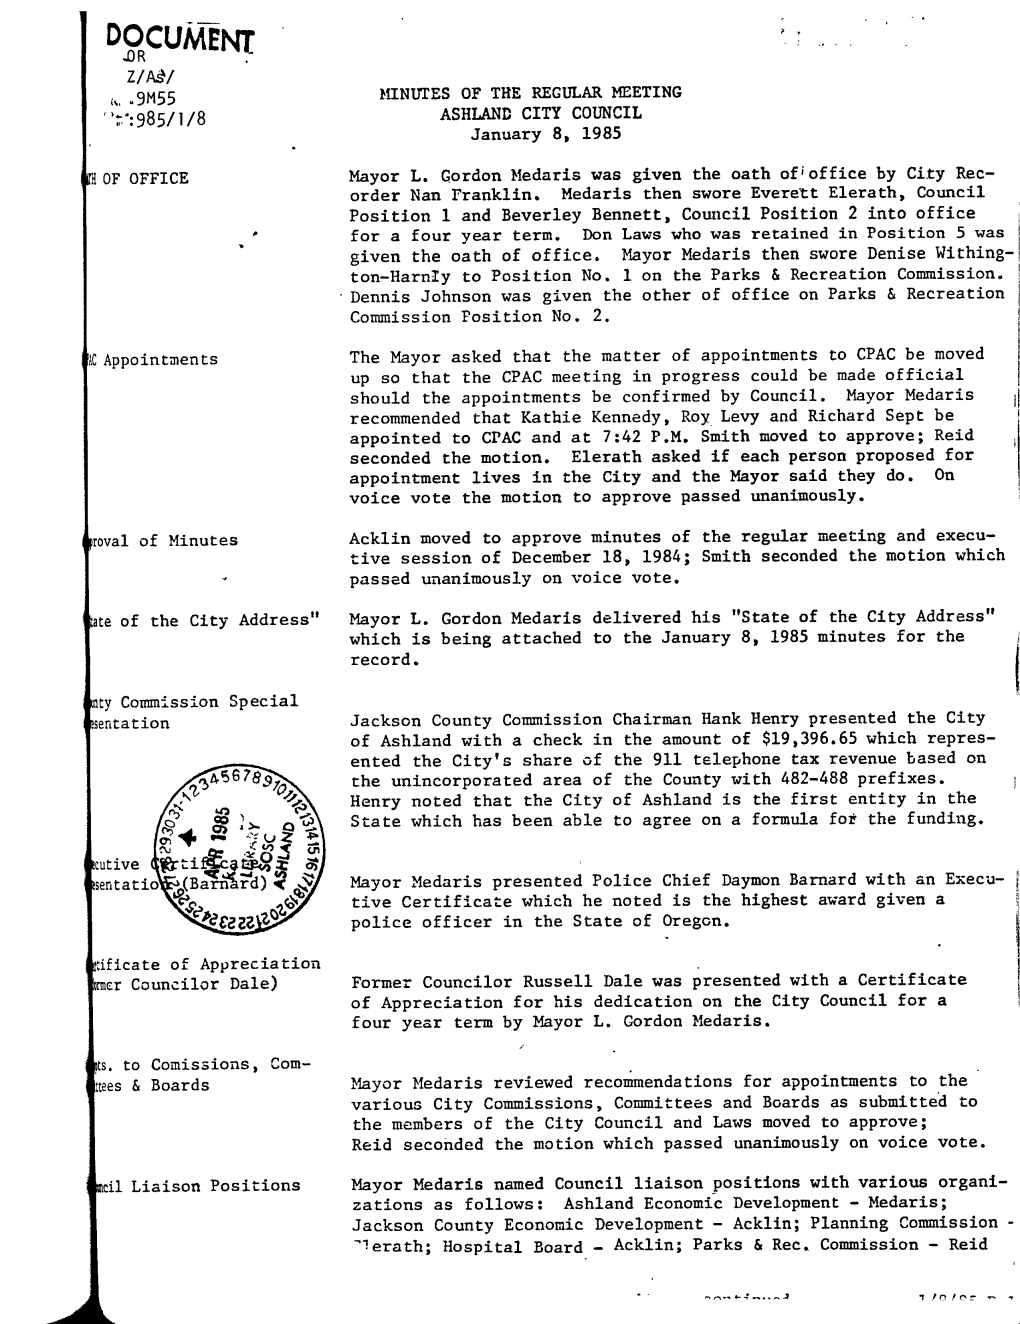 Minutes of the Regular Meeting Ashland City Council Jan. 8, 1985